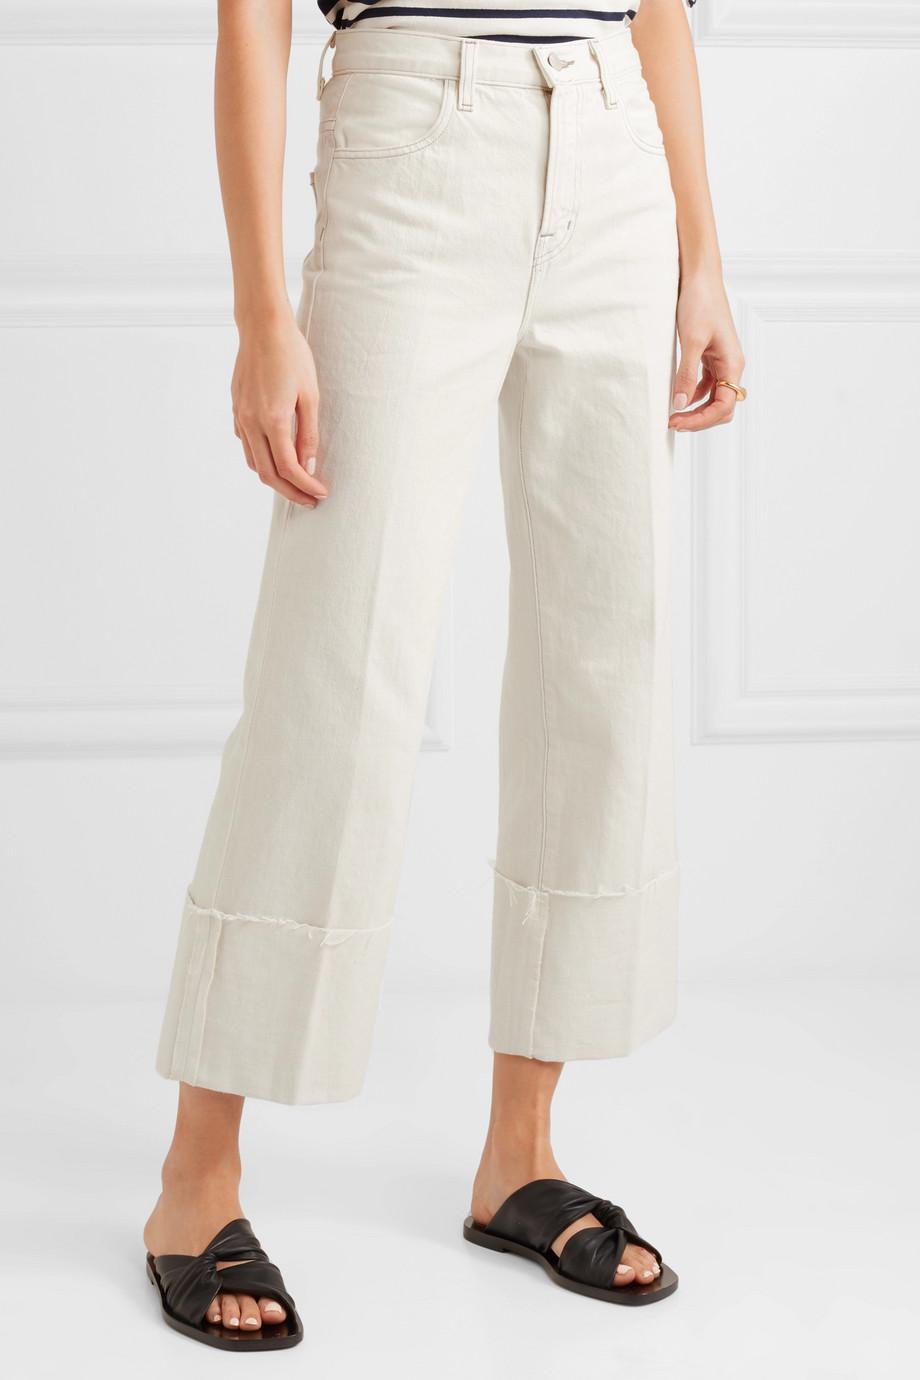 J Brand Denim Joan Cropped High-rise Wide-leg Jeans in Cream (Natural ...